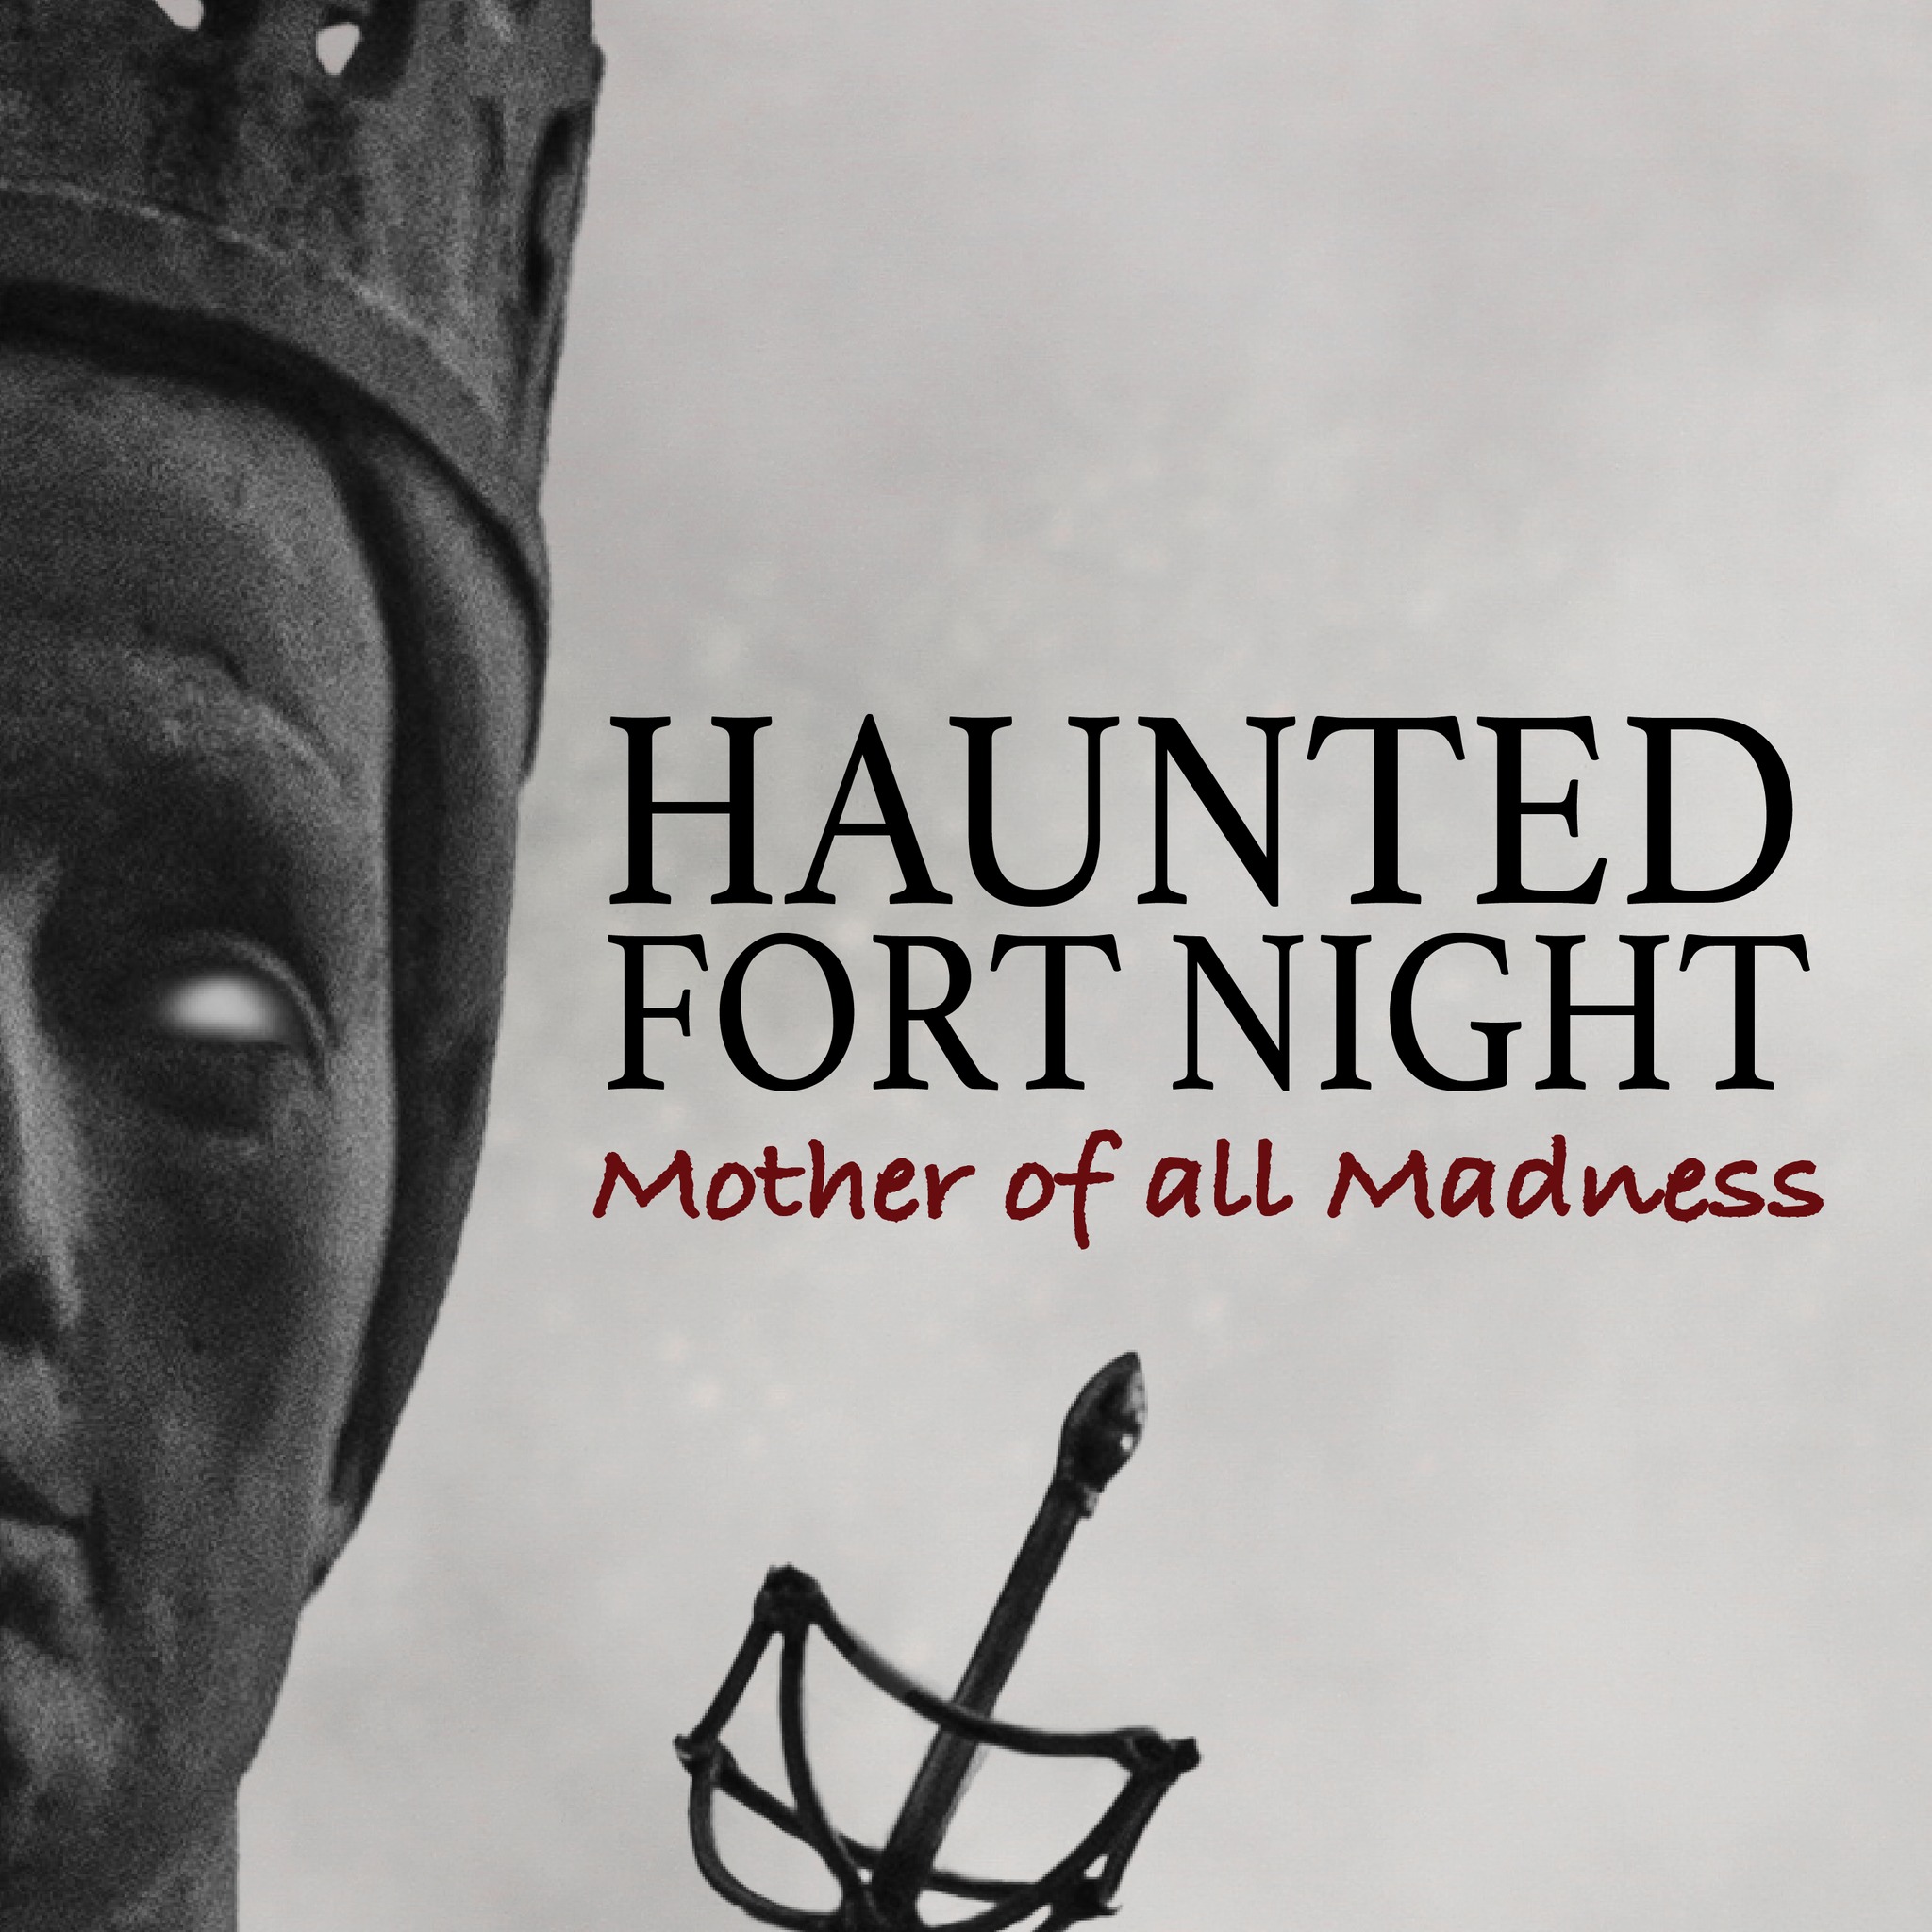 Haunted Fort Night